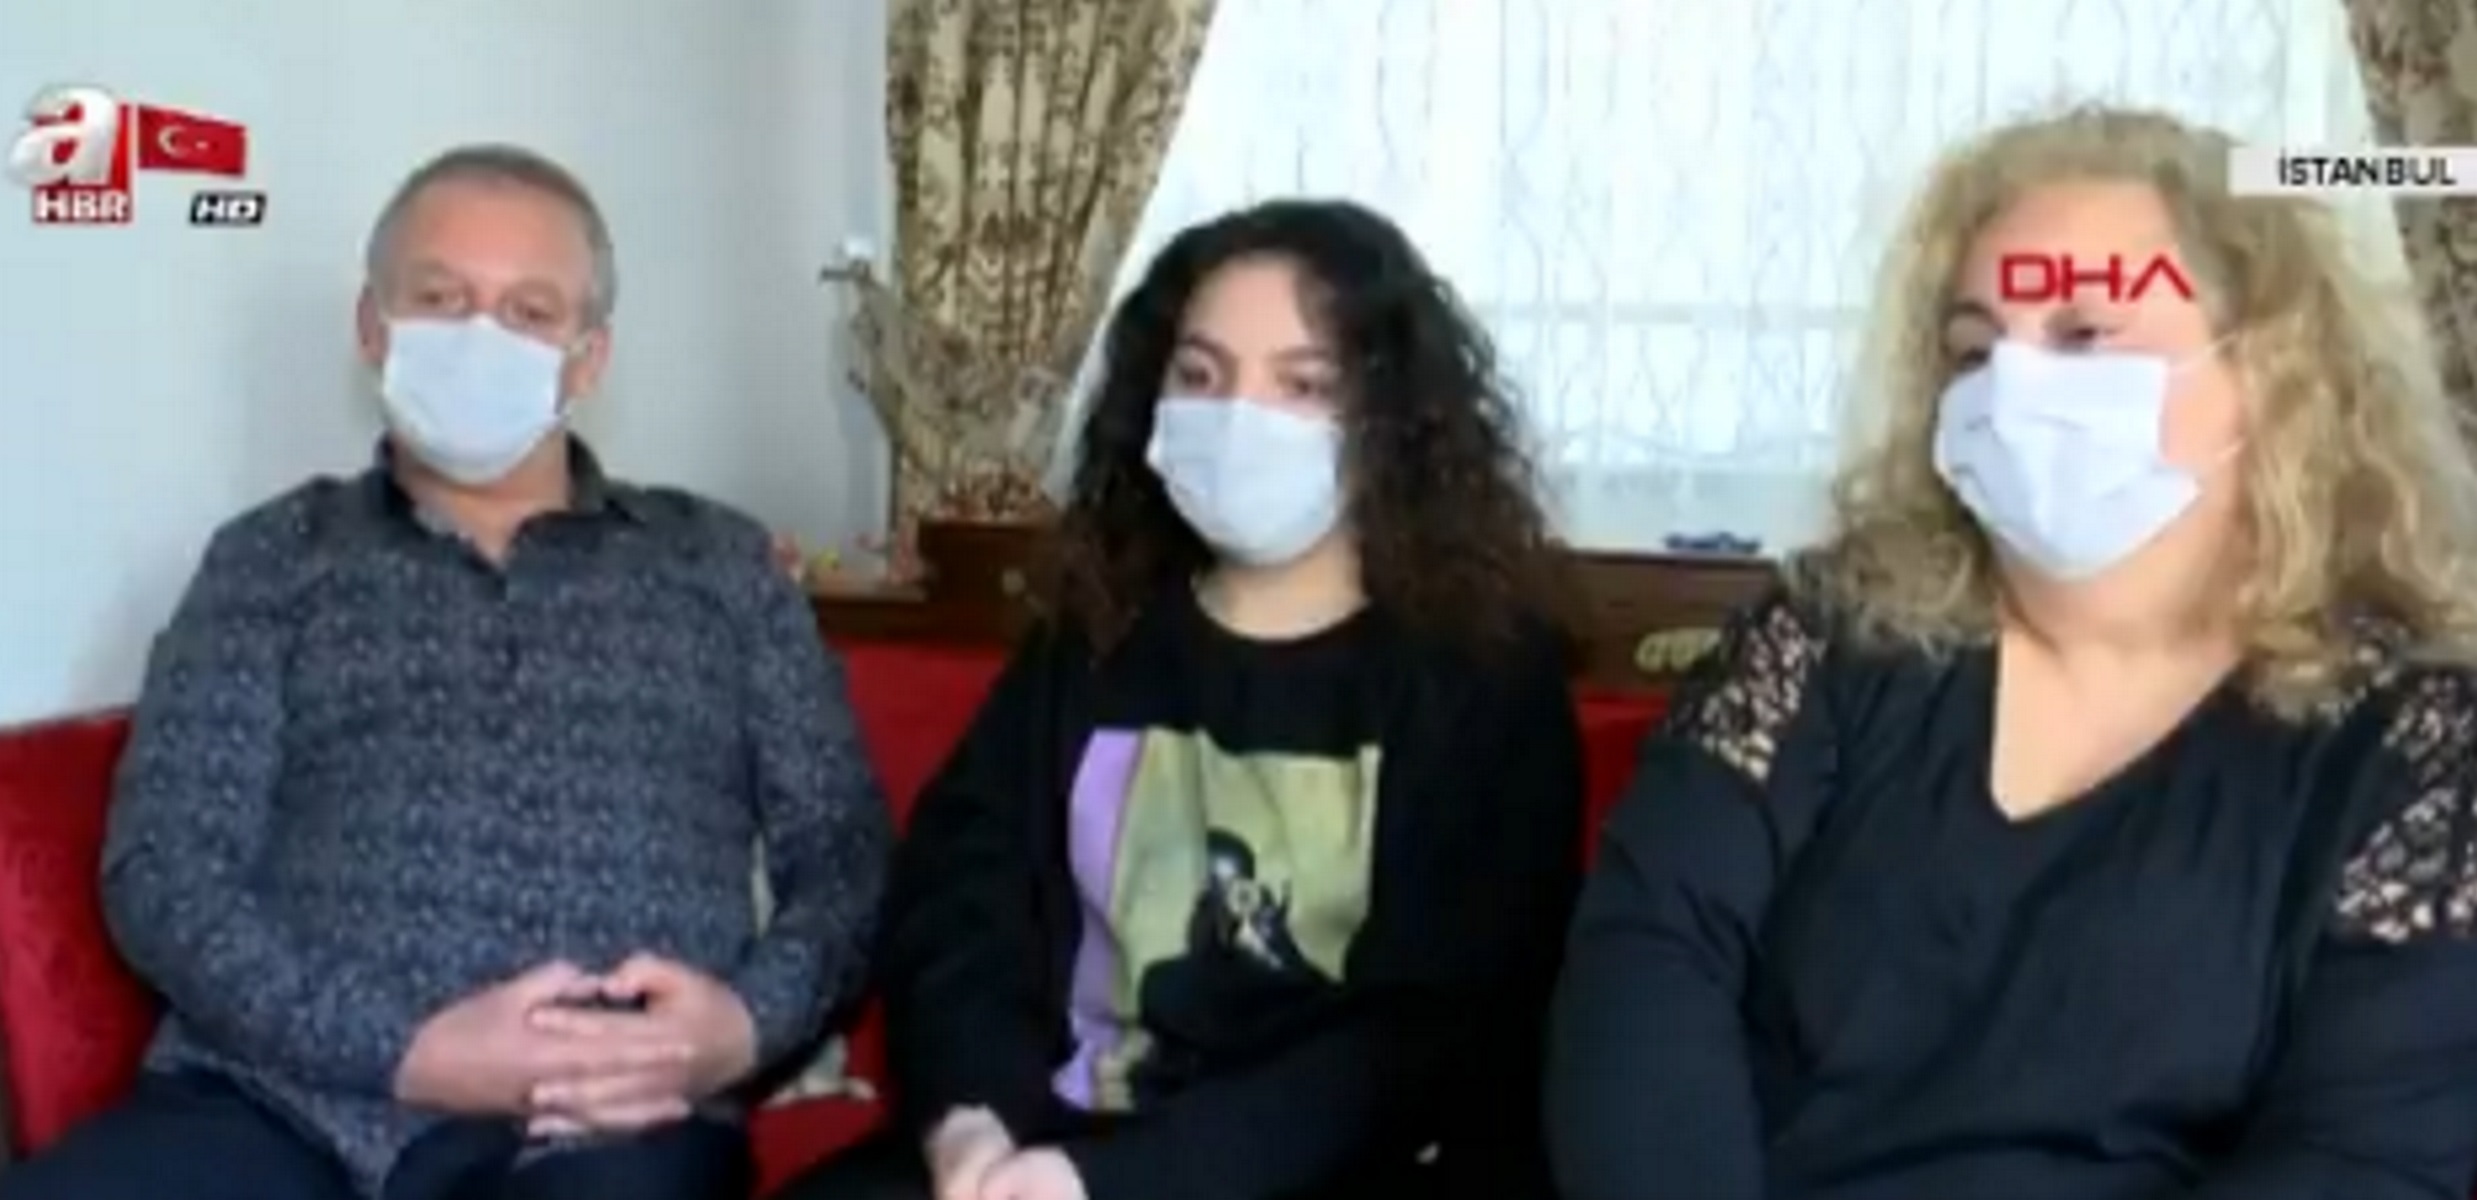 Show Ερντογάν (και) με τους ασθενείς του κορονοϊού – Βιντεοκλήση και… αποθέωση στον “σουλτάνο”